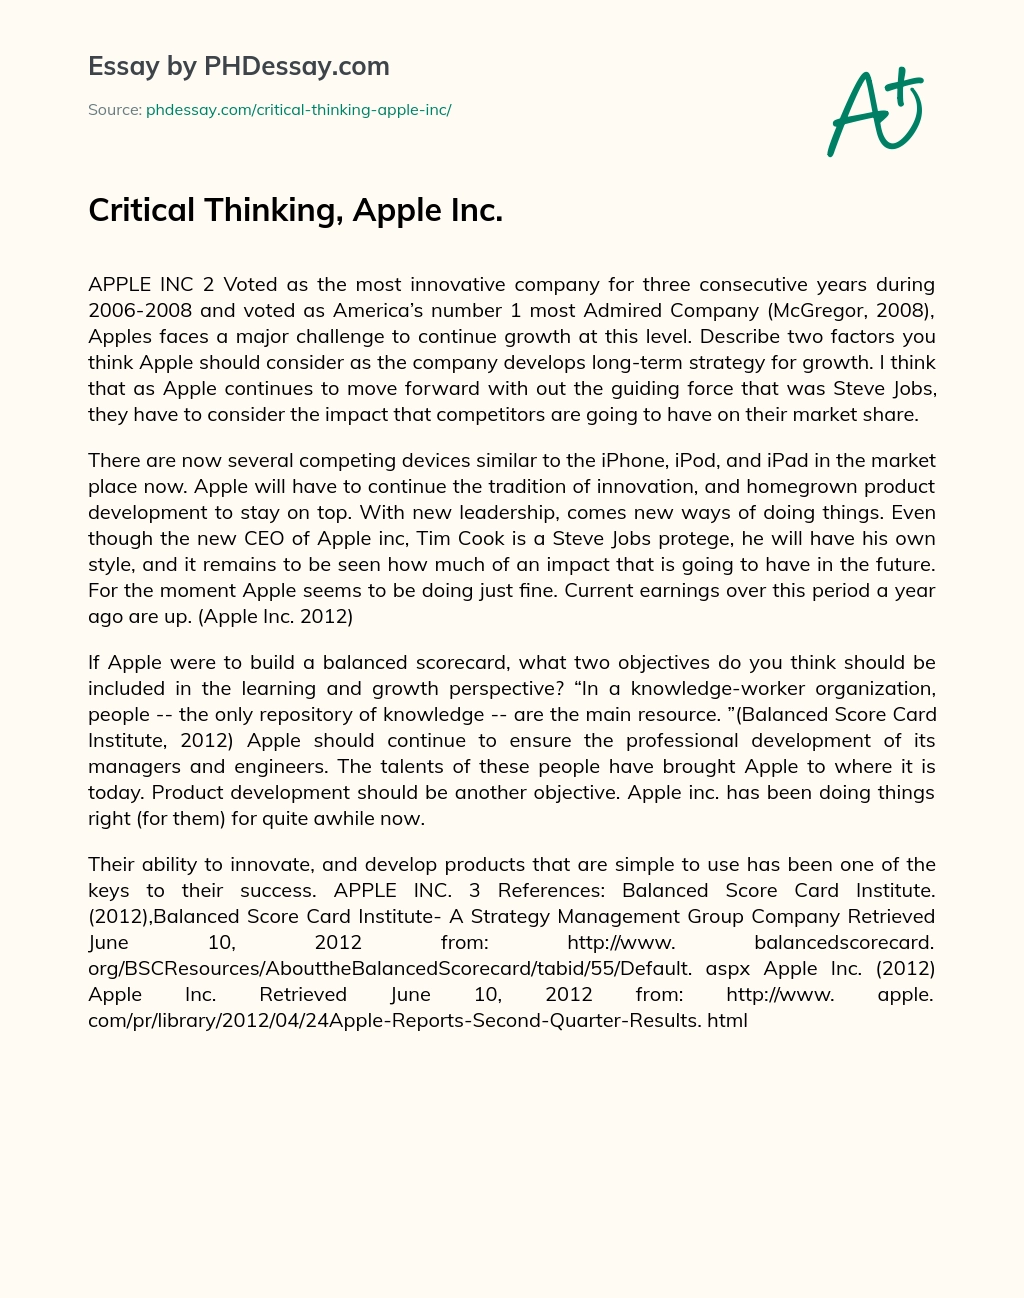 Critical Thinking, Apple Inc. essay